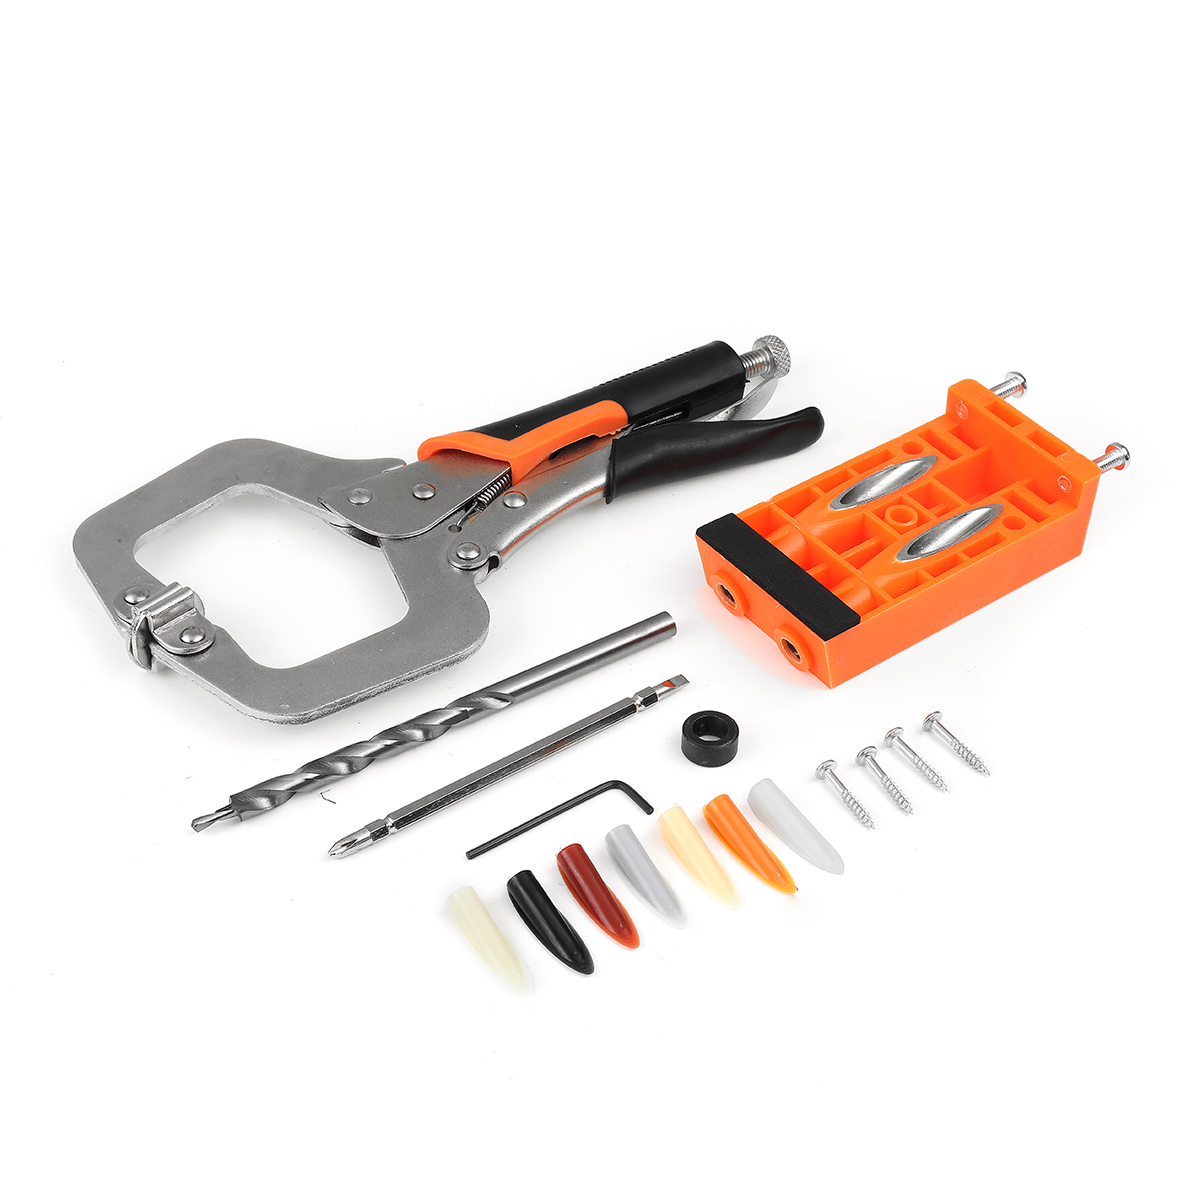 Plastic-Pocket-Hole-Jig-Set-Woodworking-Tools-Welding-C-Clamp-Locking-Plier-Tenon-Locator-1662682-1